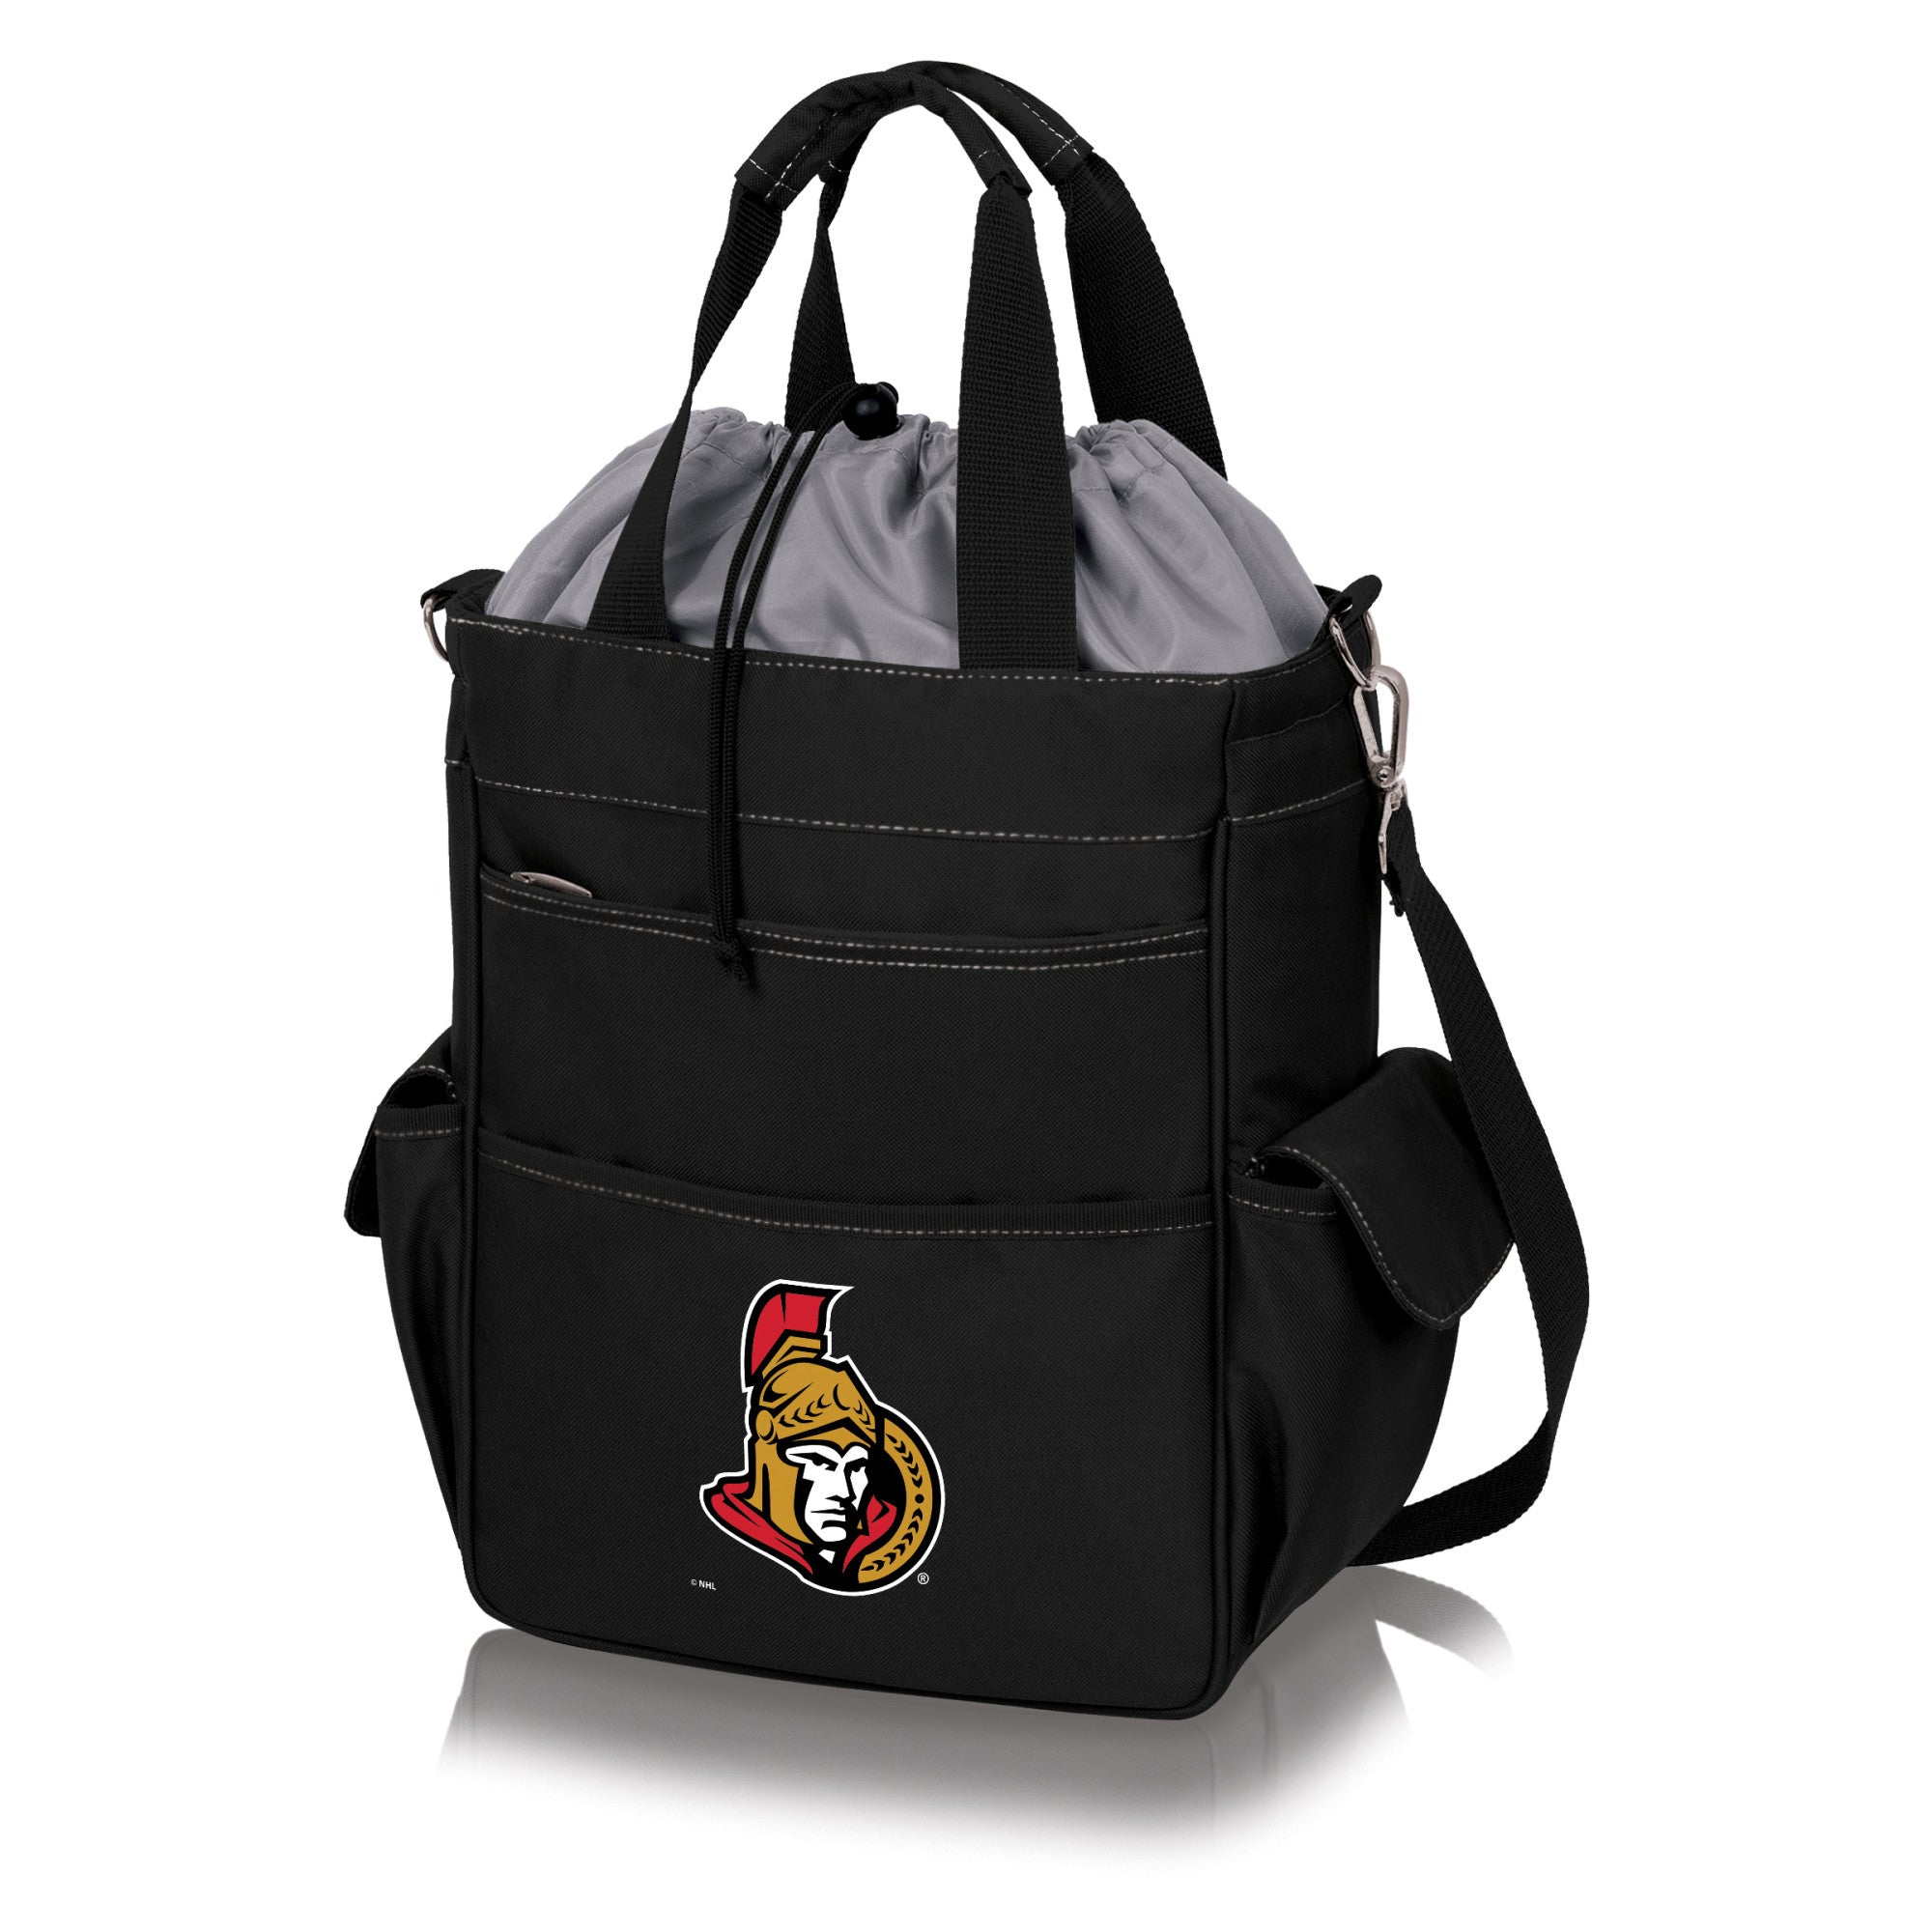 Ottawa Senators - Activo Cooler Tote Bag